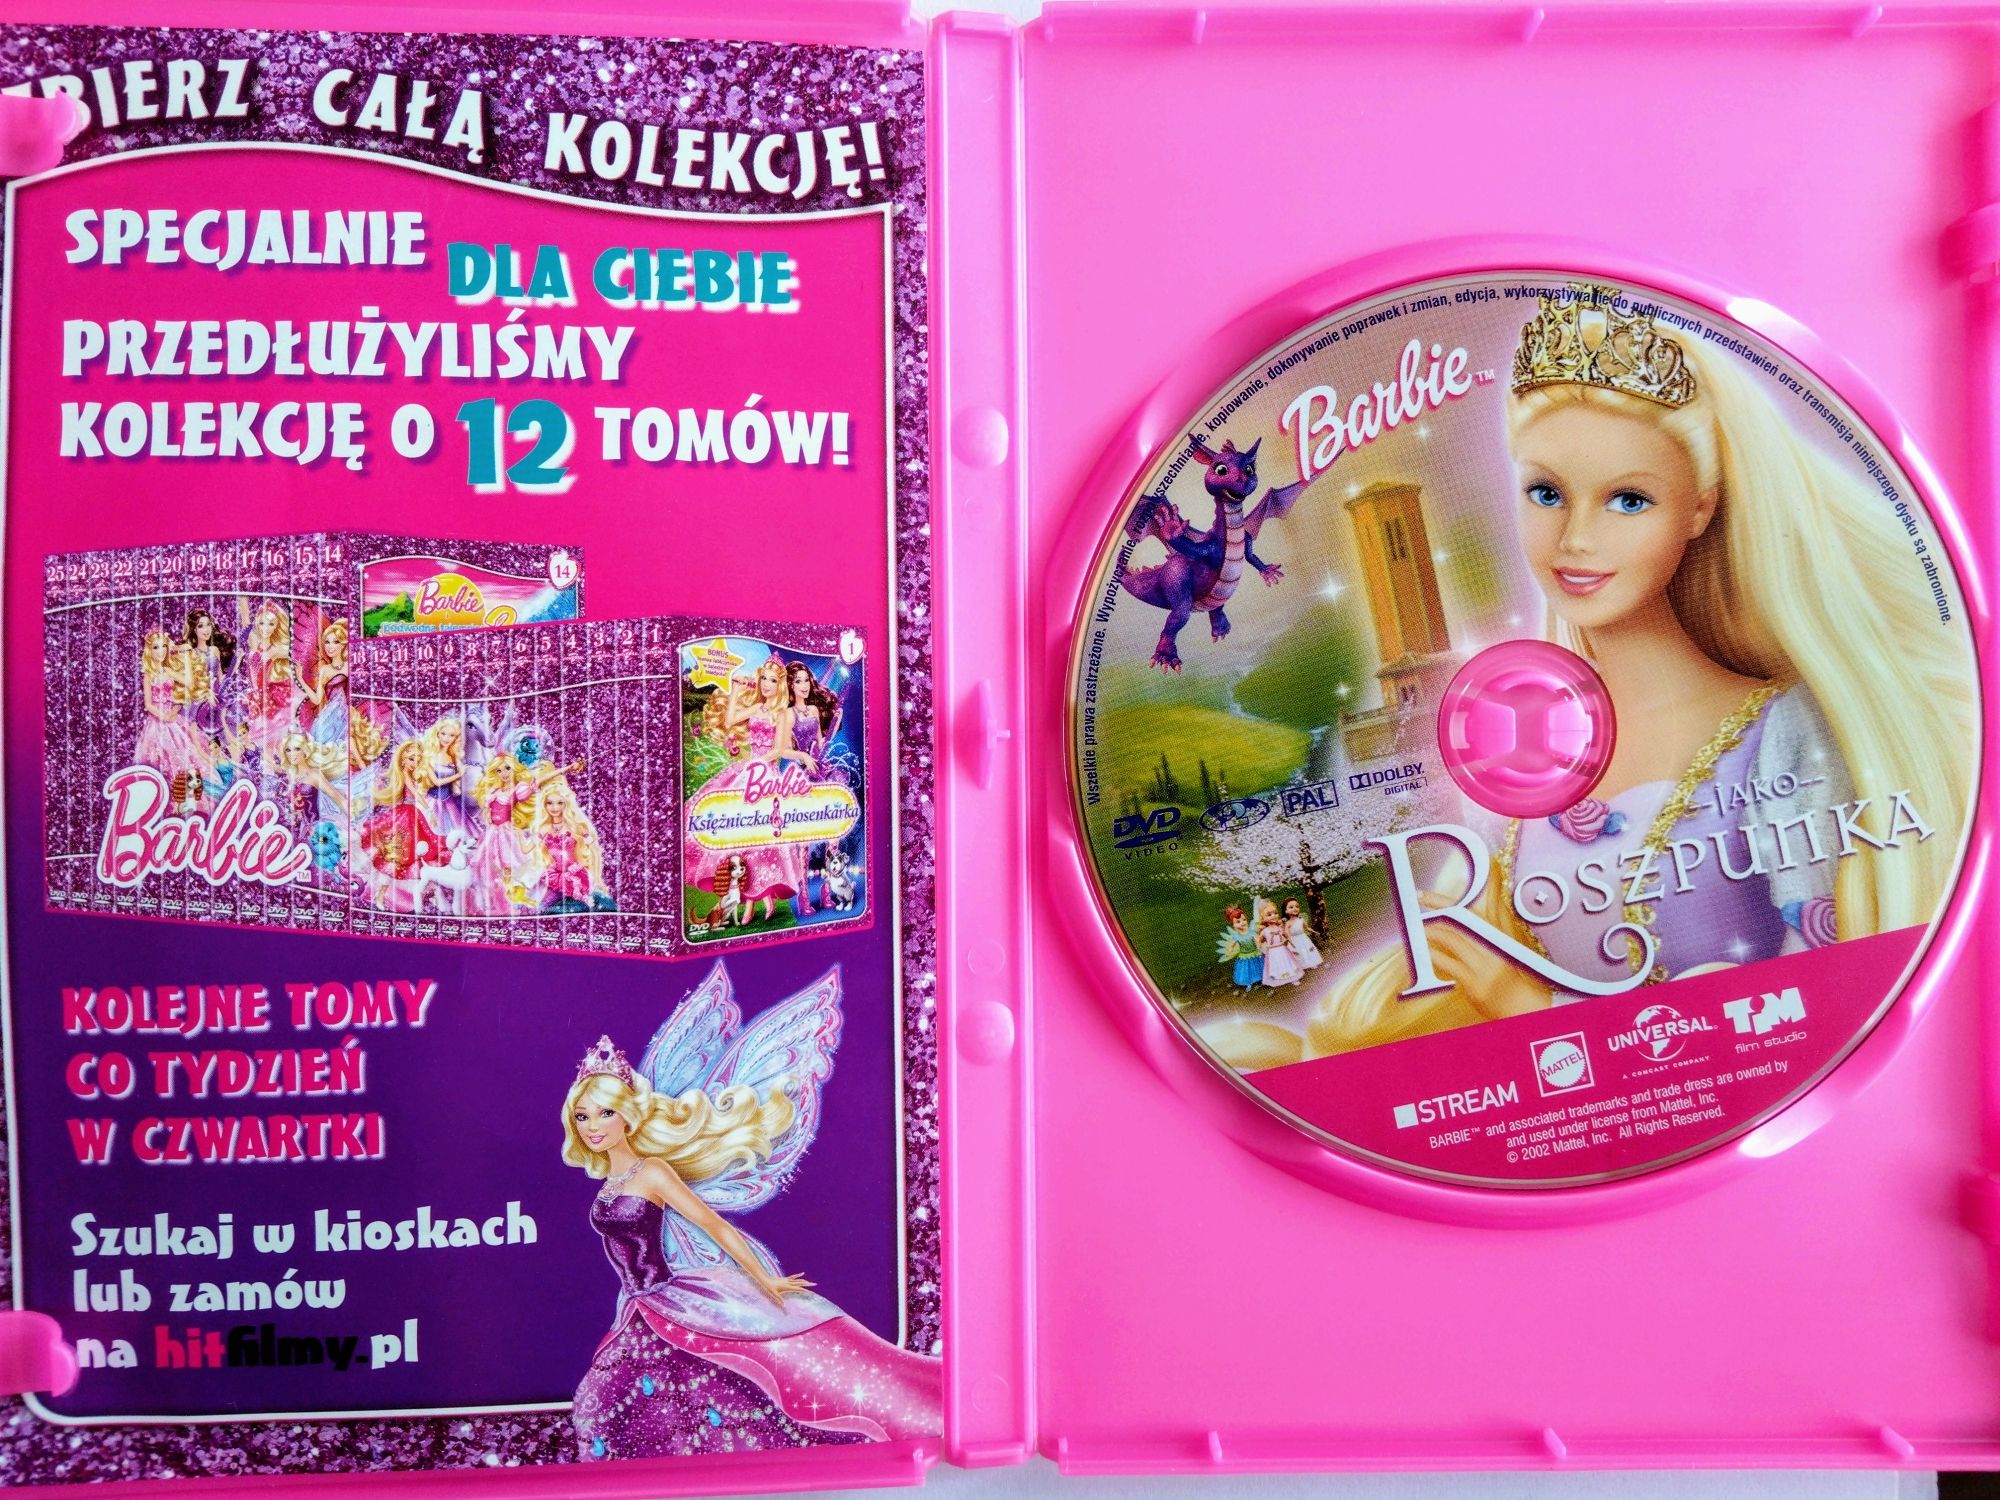 Barbie Jako Roszpunka DVD